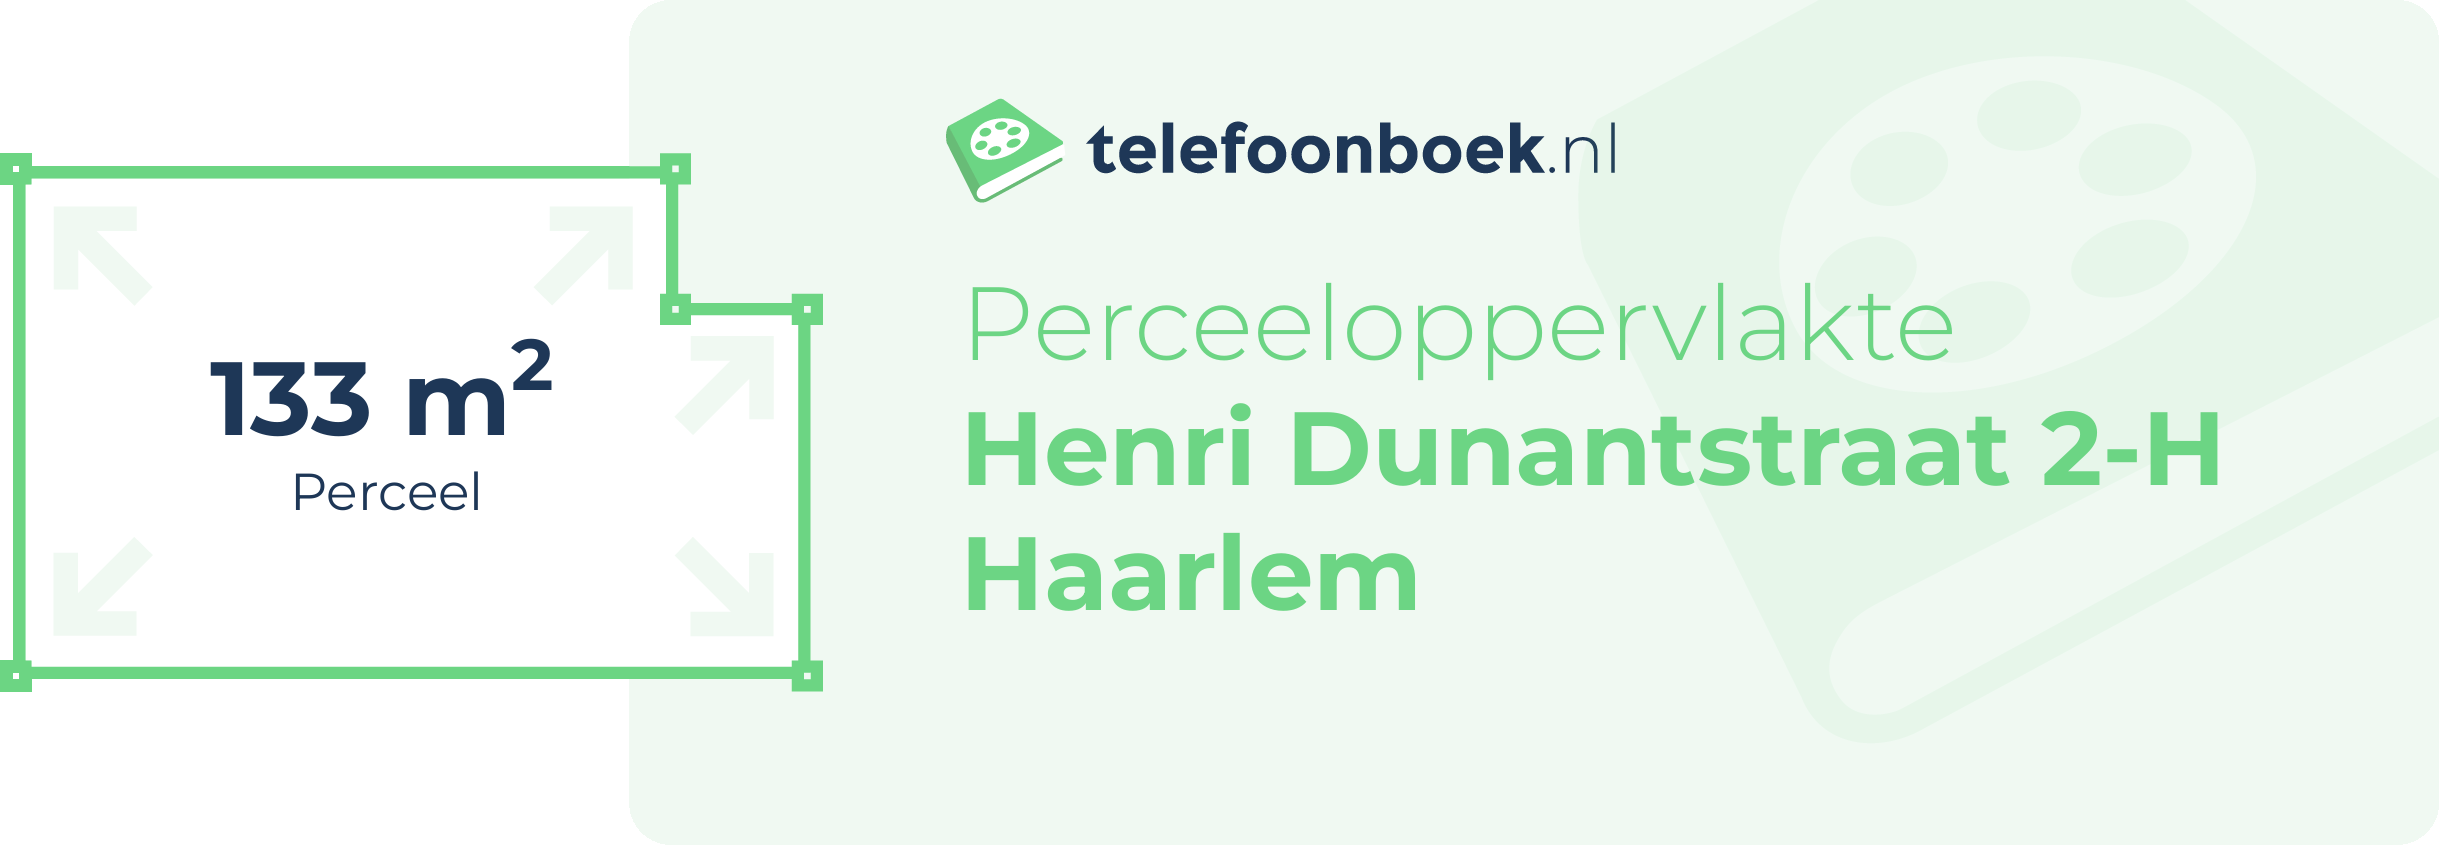 Perceeloppervlakte Henri Dunantstraat 2-H Haarlem